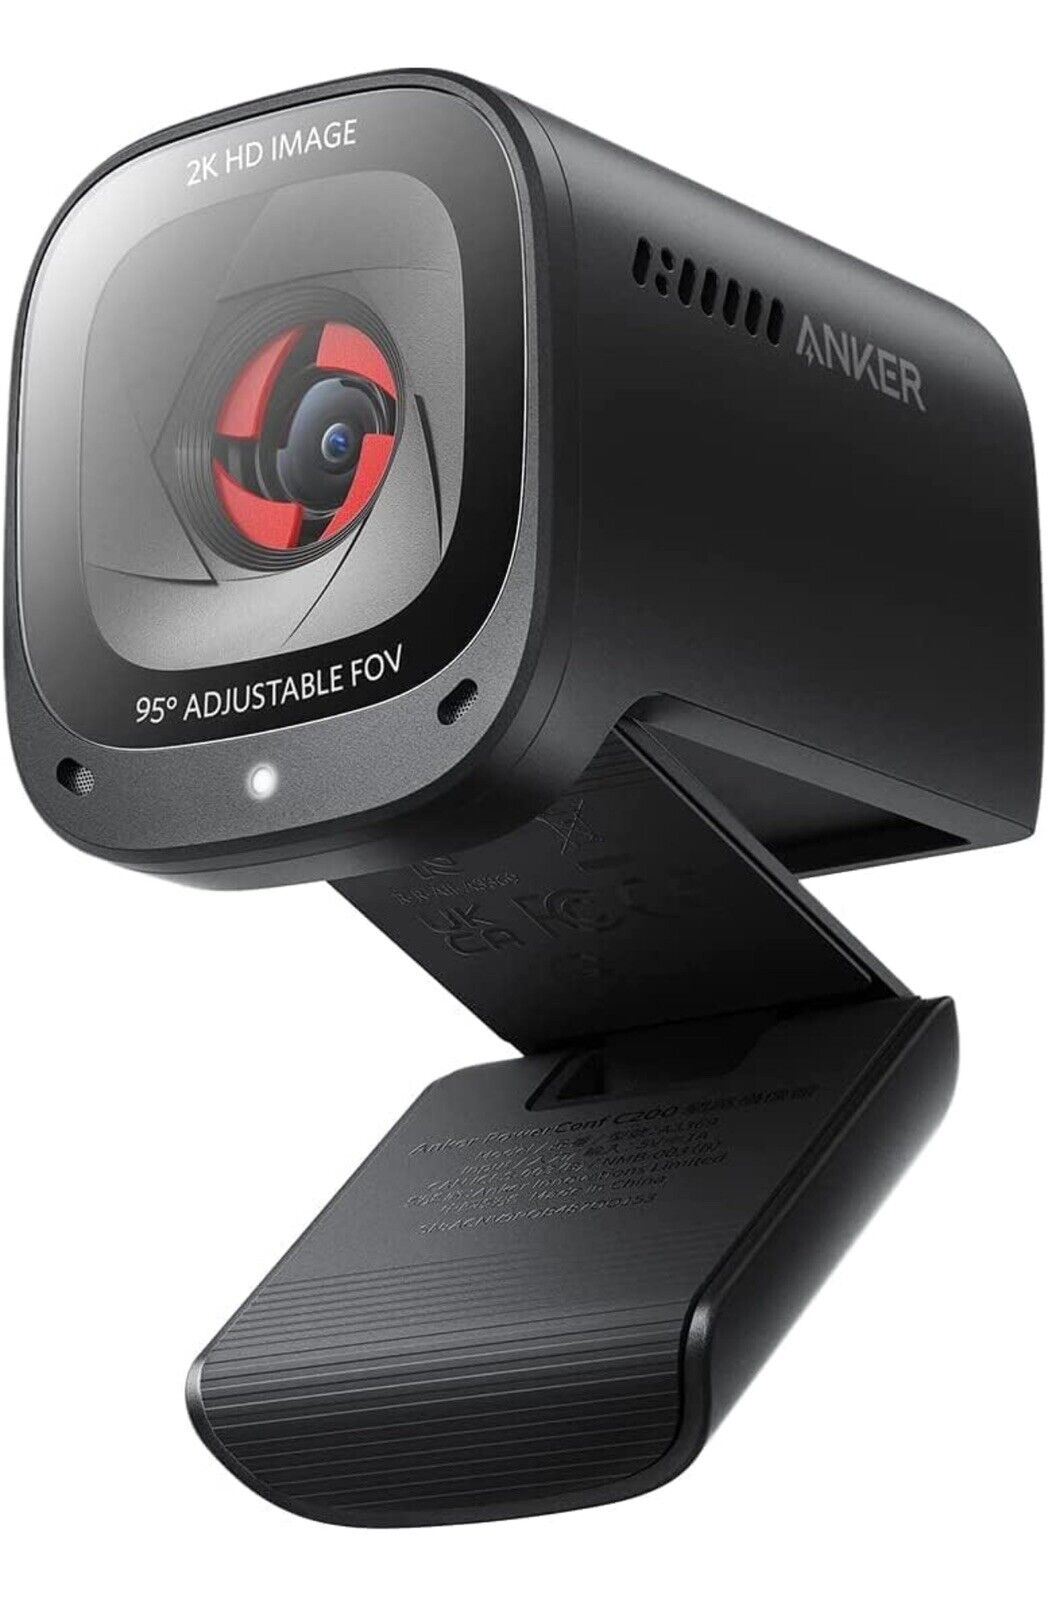 Anker PowerConf C200 2K Mac Webcam - Black (A3369) Sealed